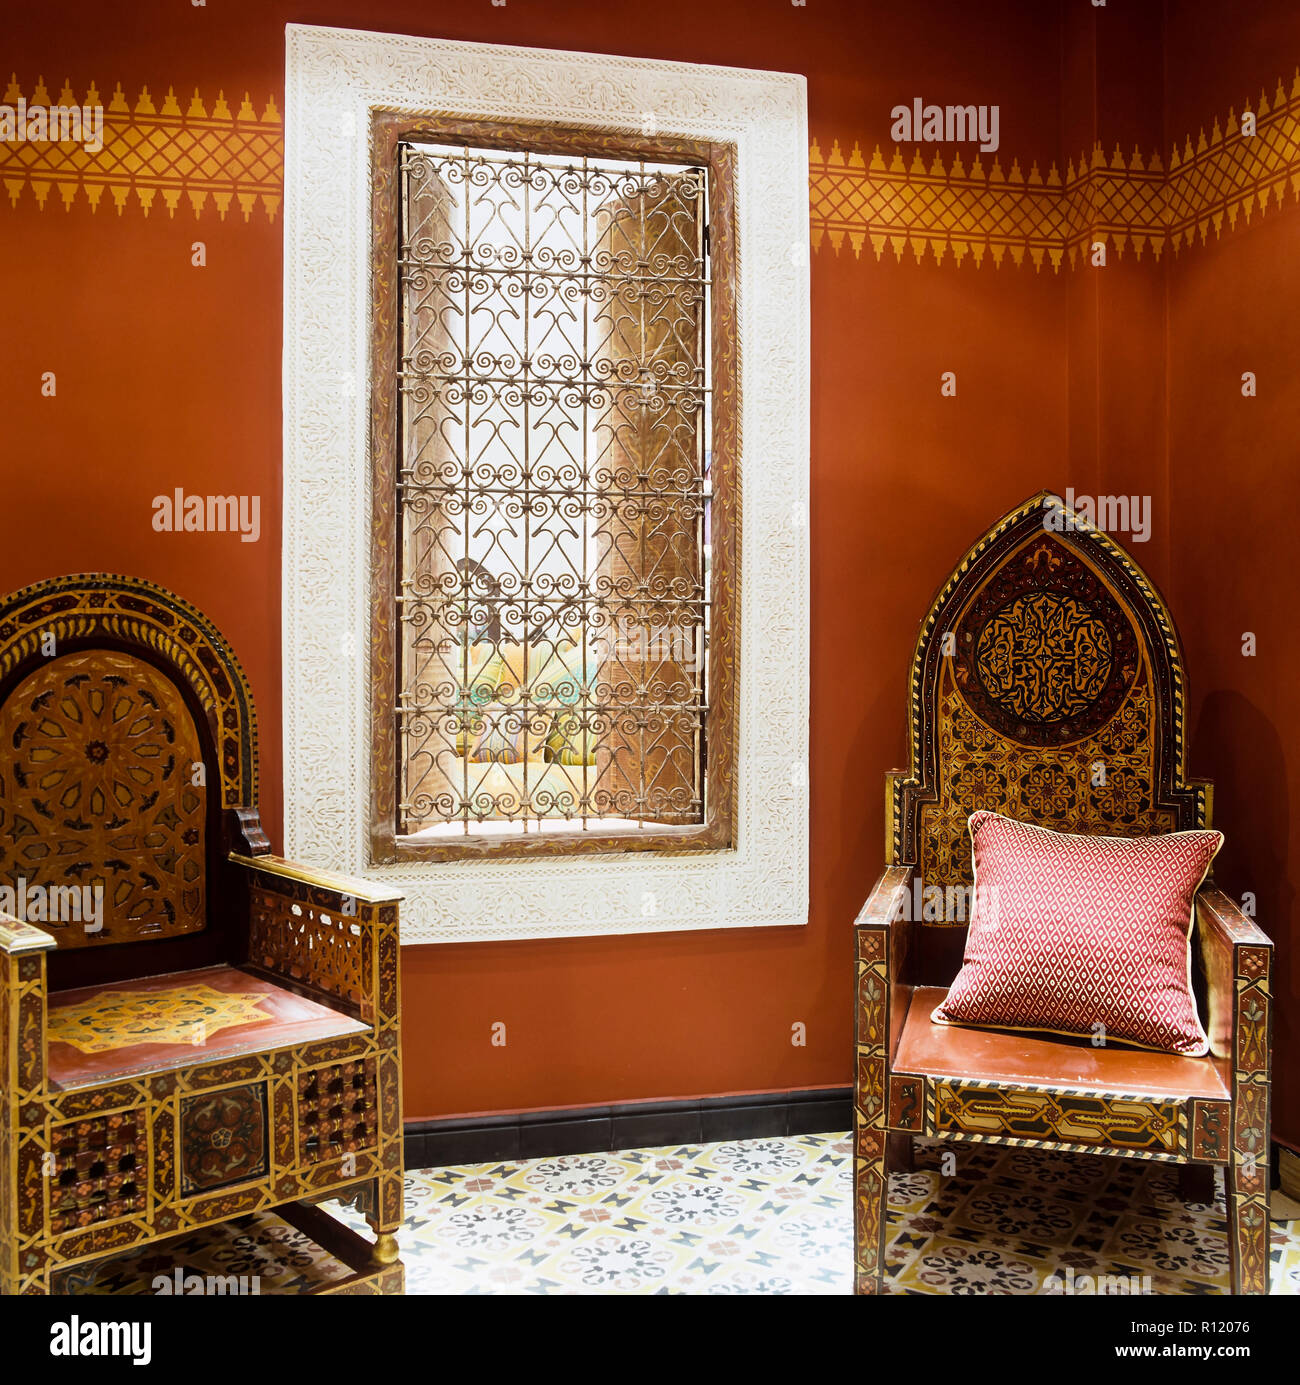 Stile Arabo sedie e finestra Foto stock - Alamy